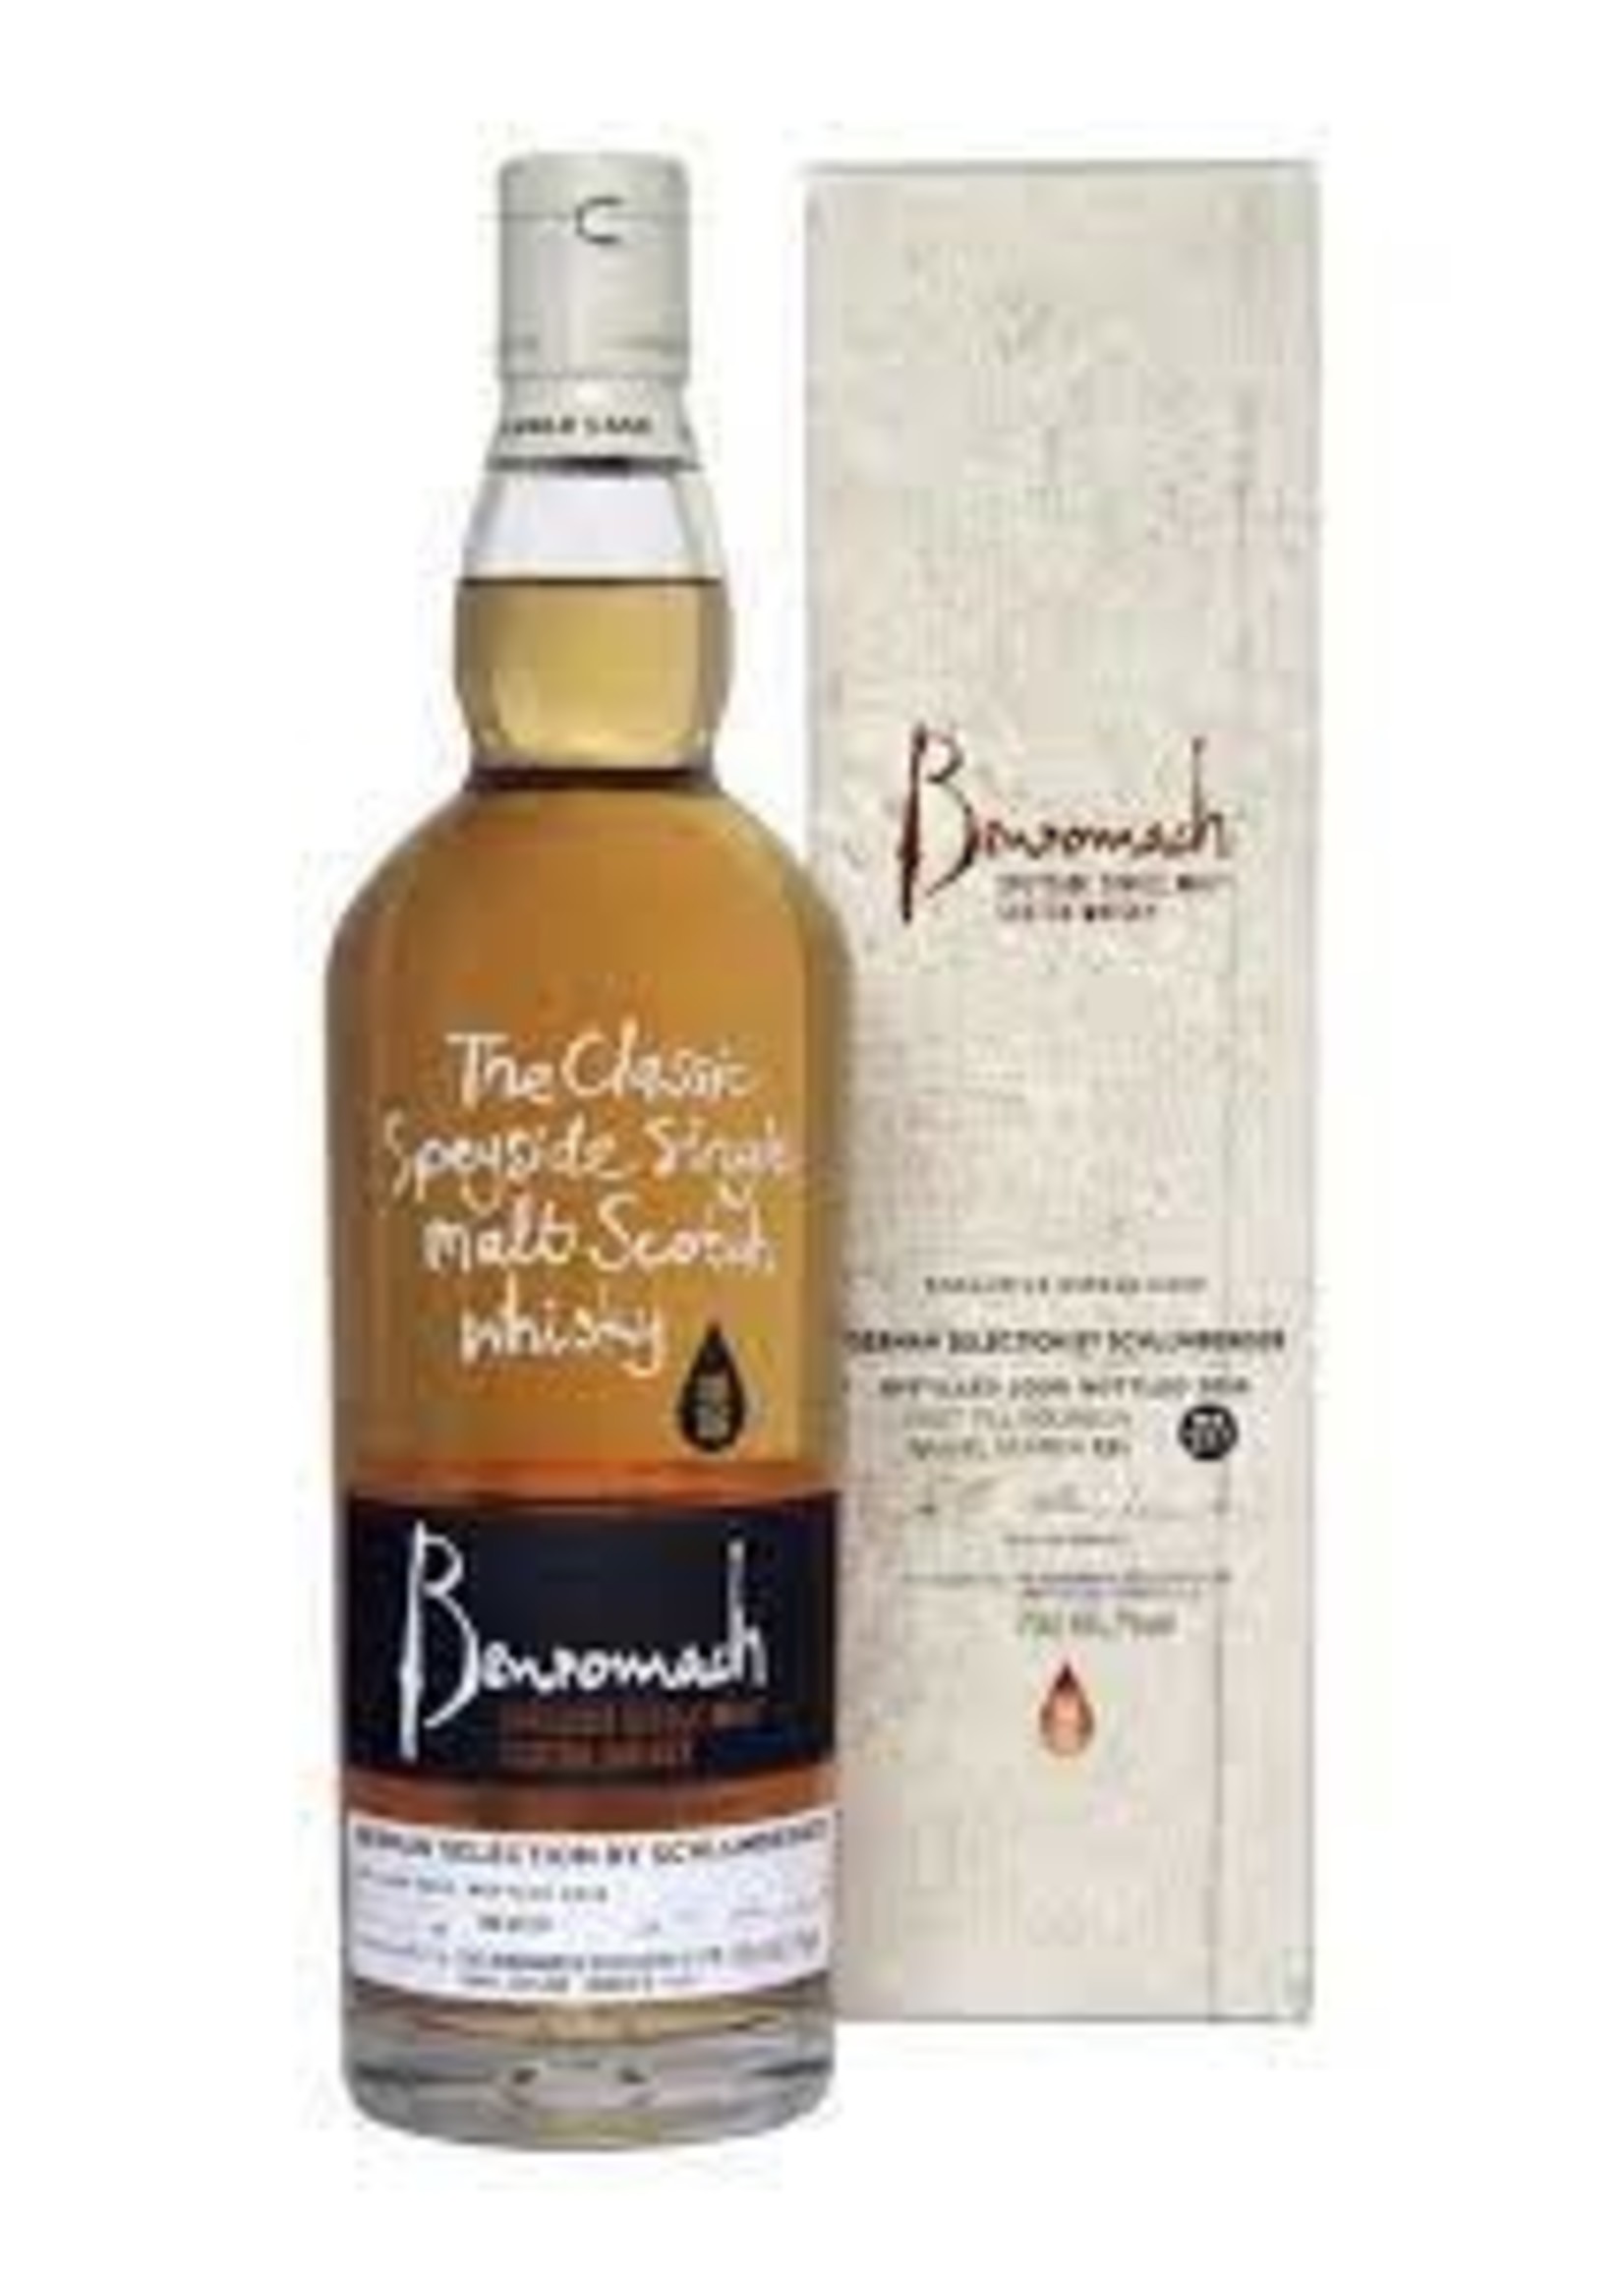 Benromach Exclusive Single Cask B C Merchants Single Malt Scotch Whisky 2009 8 yr old 1st fill Barrel #543 750ml